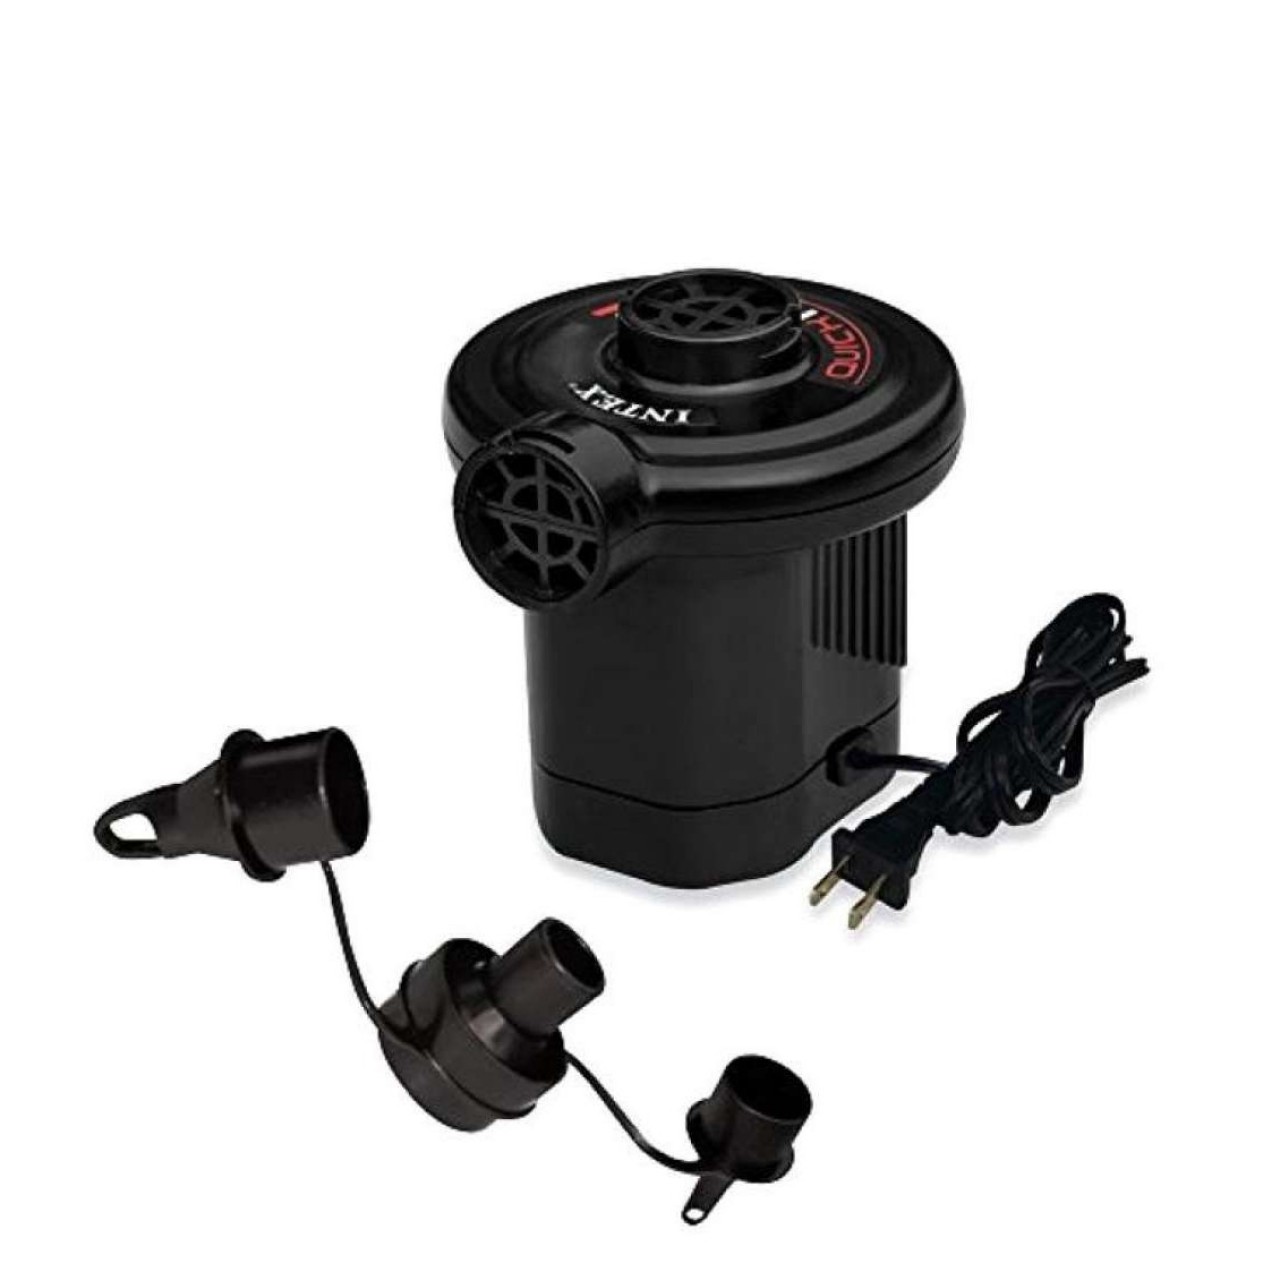 Portable Electric Air Pump Ht-196 - 3 Nozzles - Black - High quality plastic PVC material